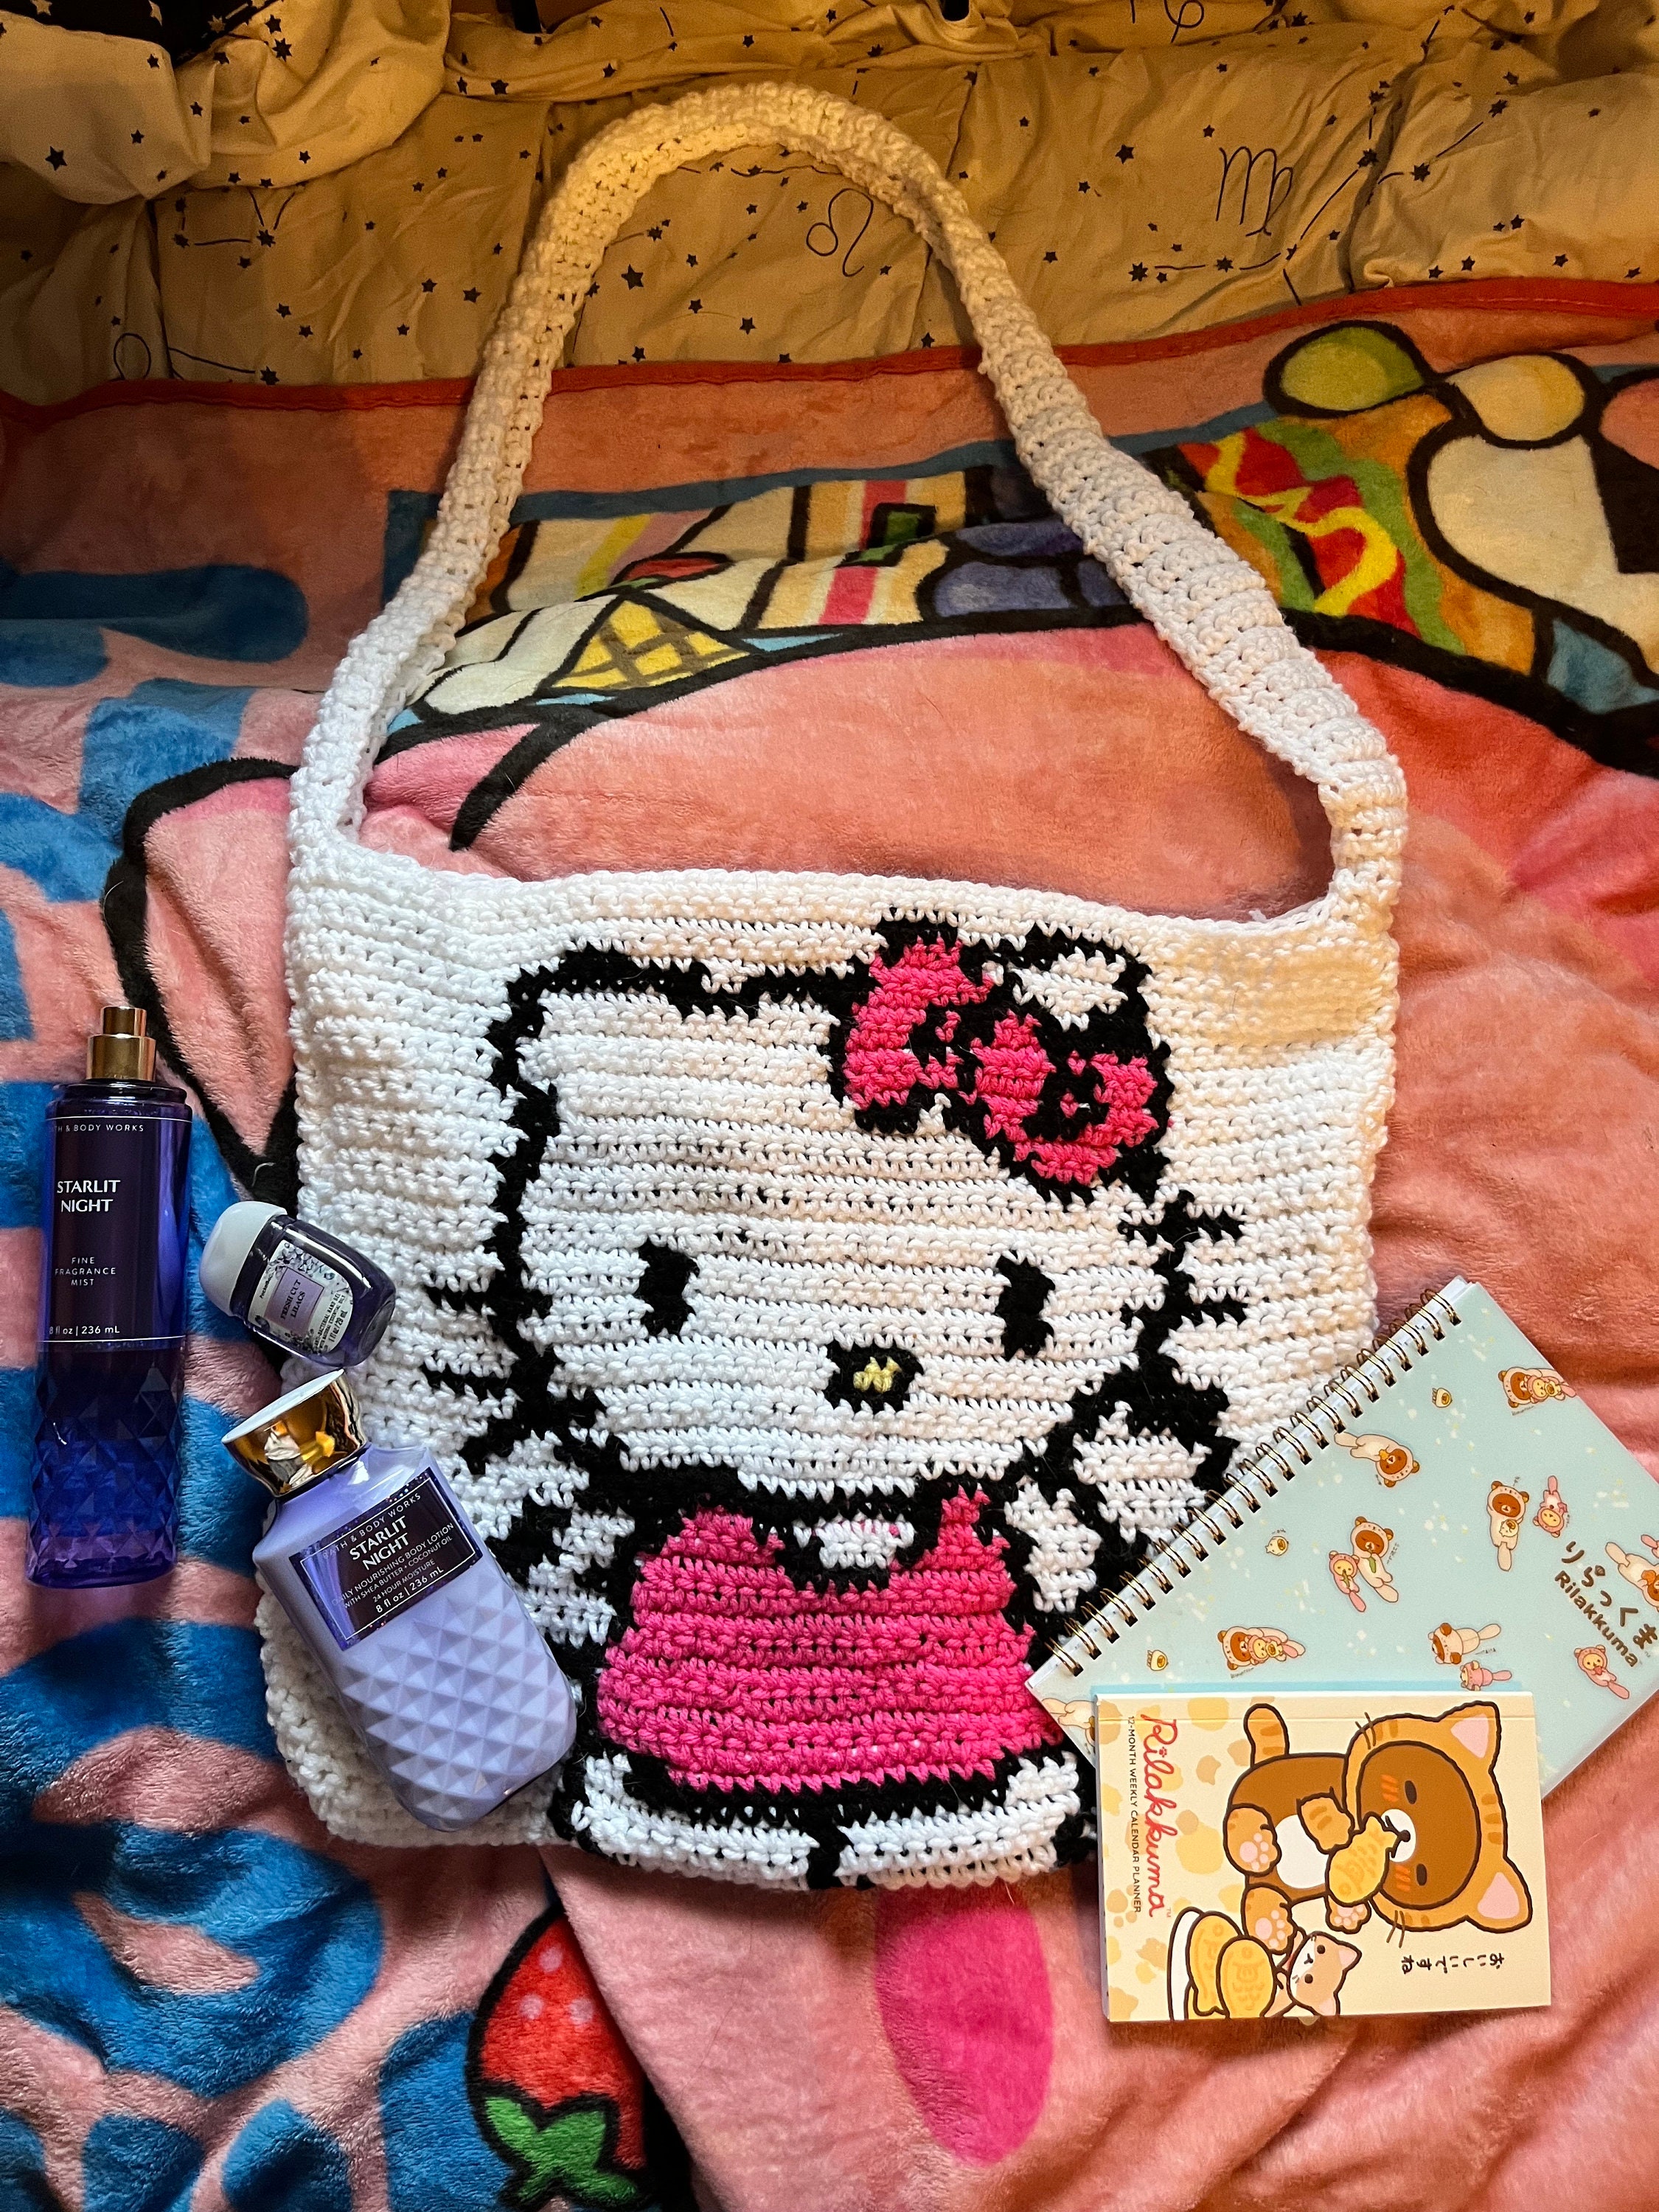 New Hello Kitty Purses and Handbags Authentic Portable Shoulder High  Capacity Shopping Bag Mommy Bag Sanrio Luxury Designer Bag - AliExpress